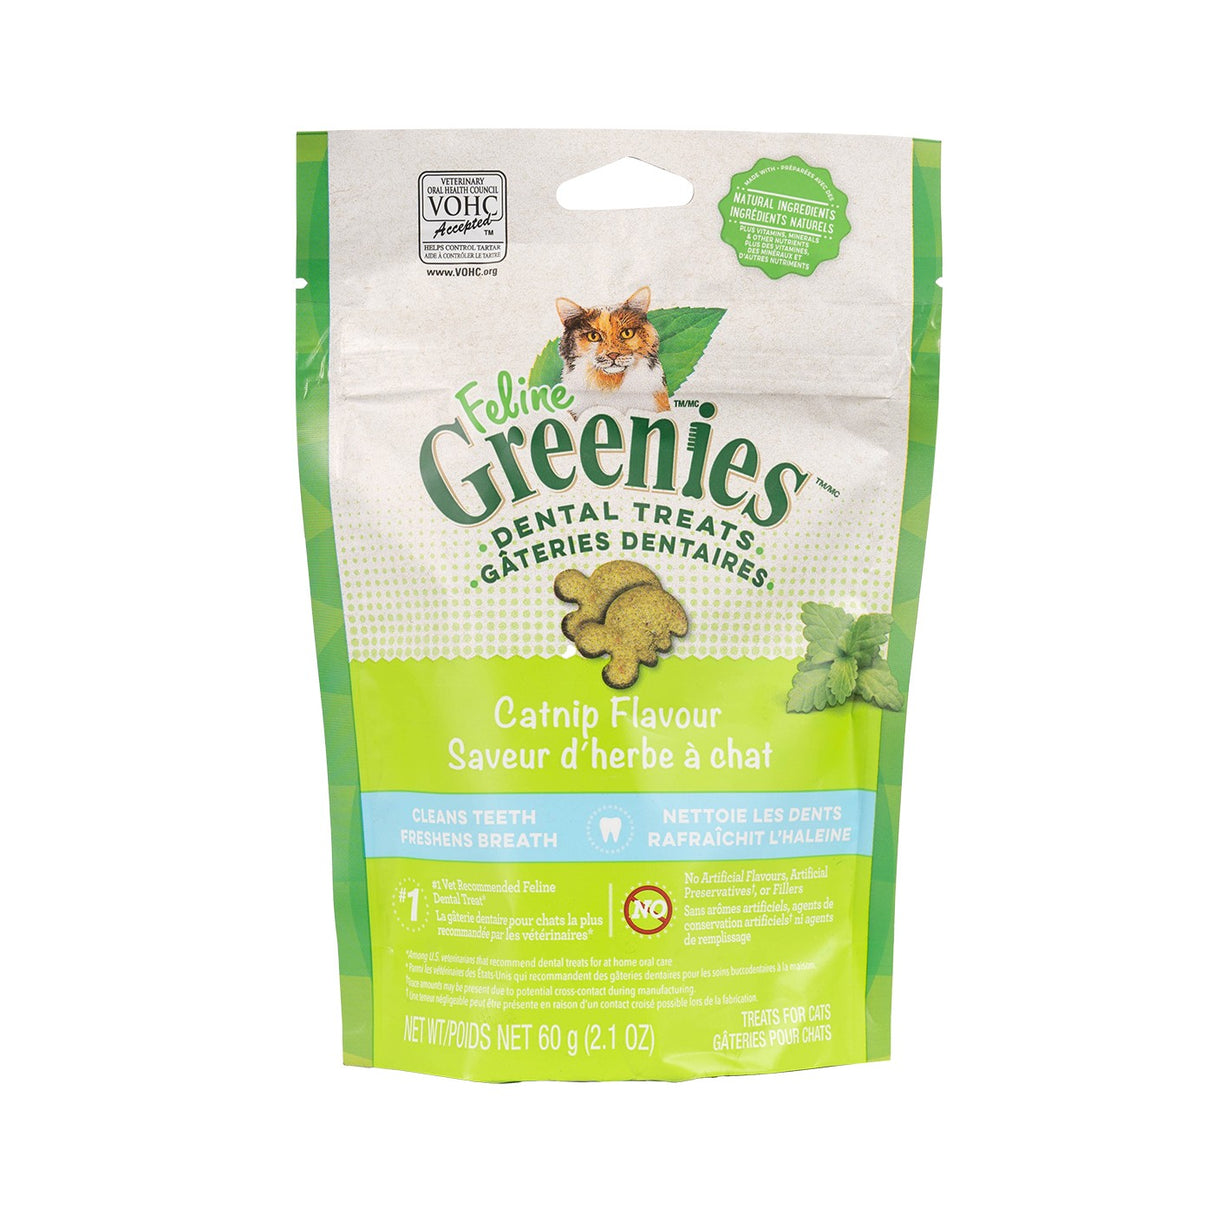 Feline Greenies Catnip 2.5 oz.